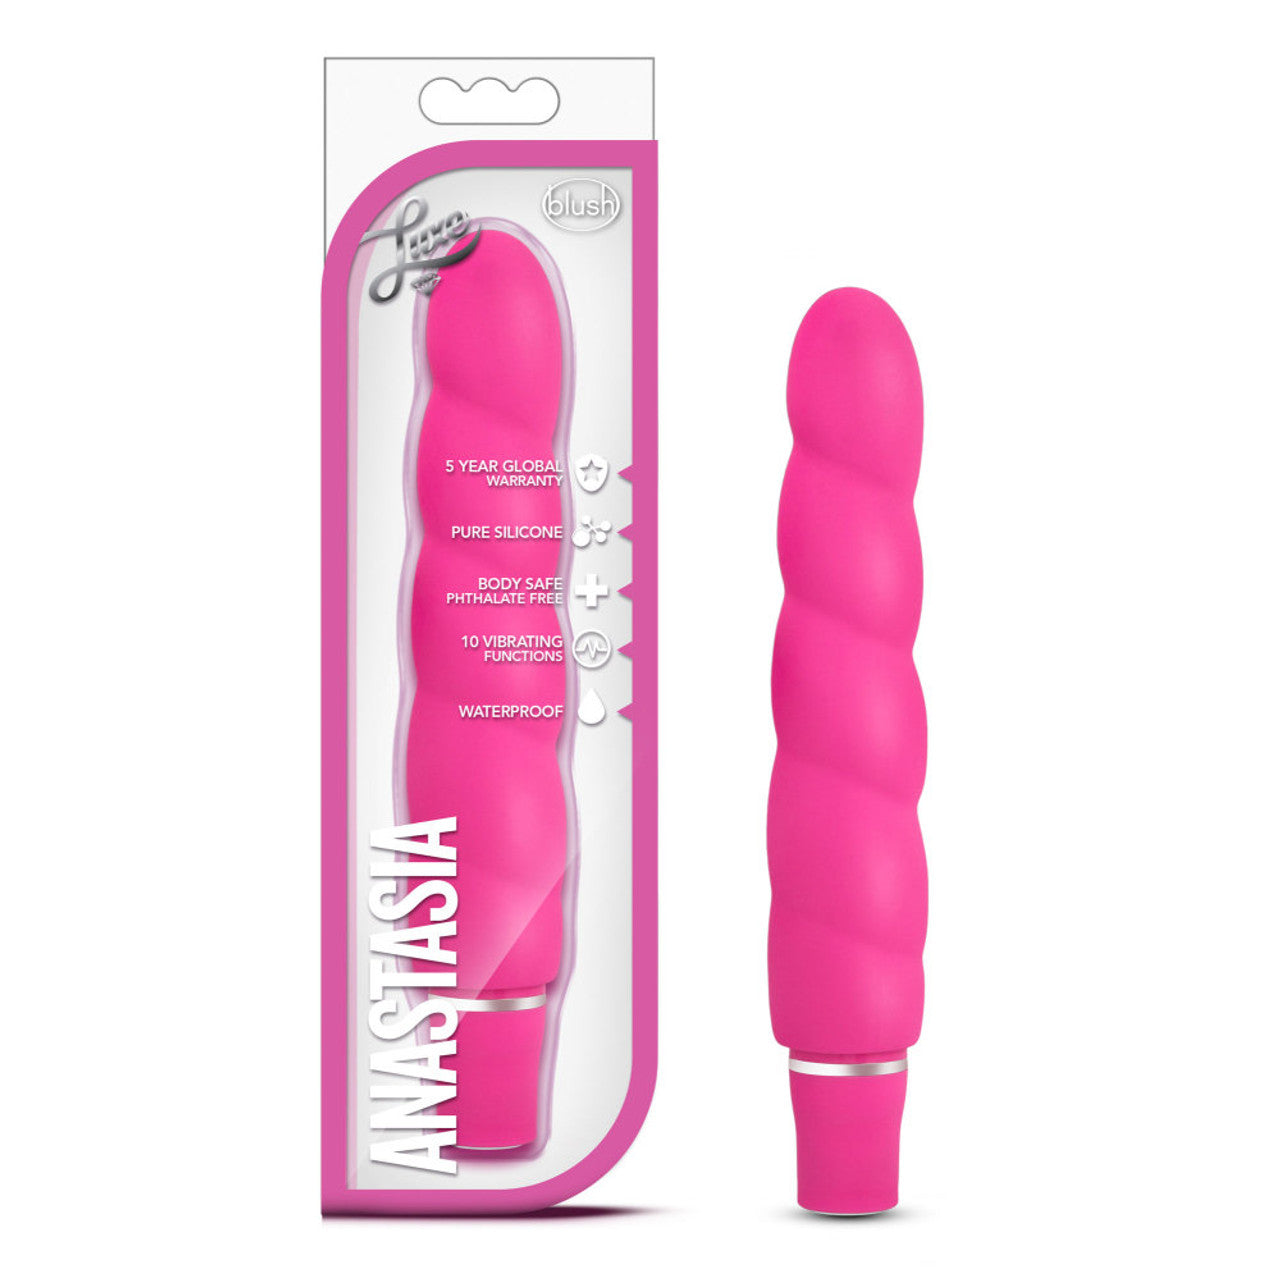 Luxe Anastasia Multispeed Silicone Vibrator - Pink - Thorn & Feather